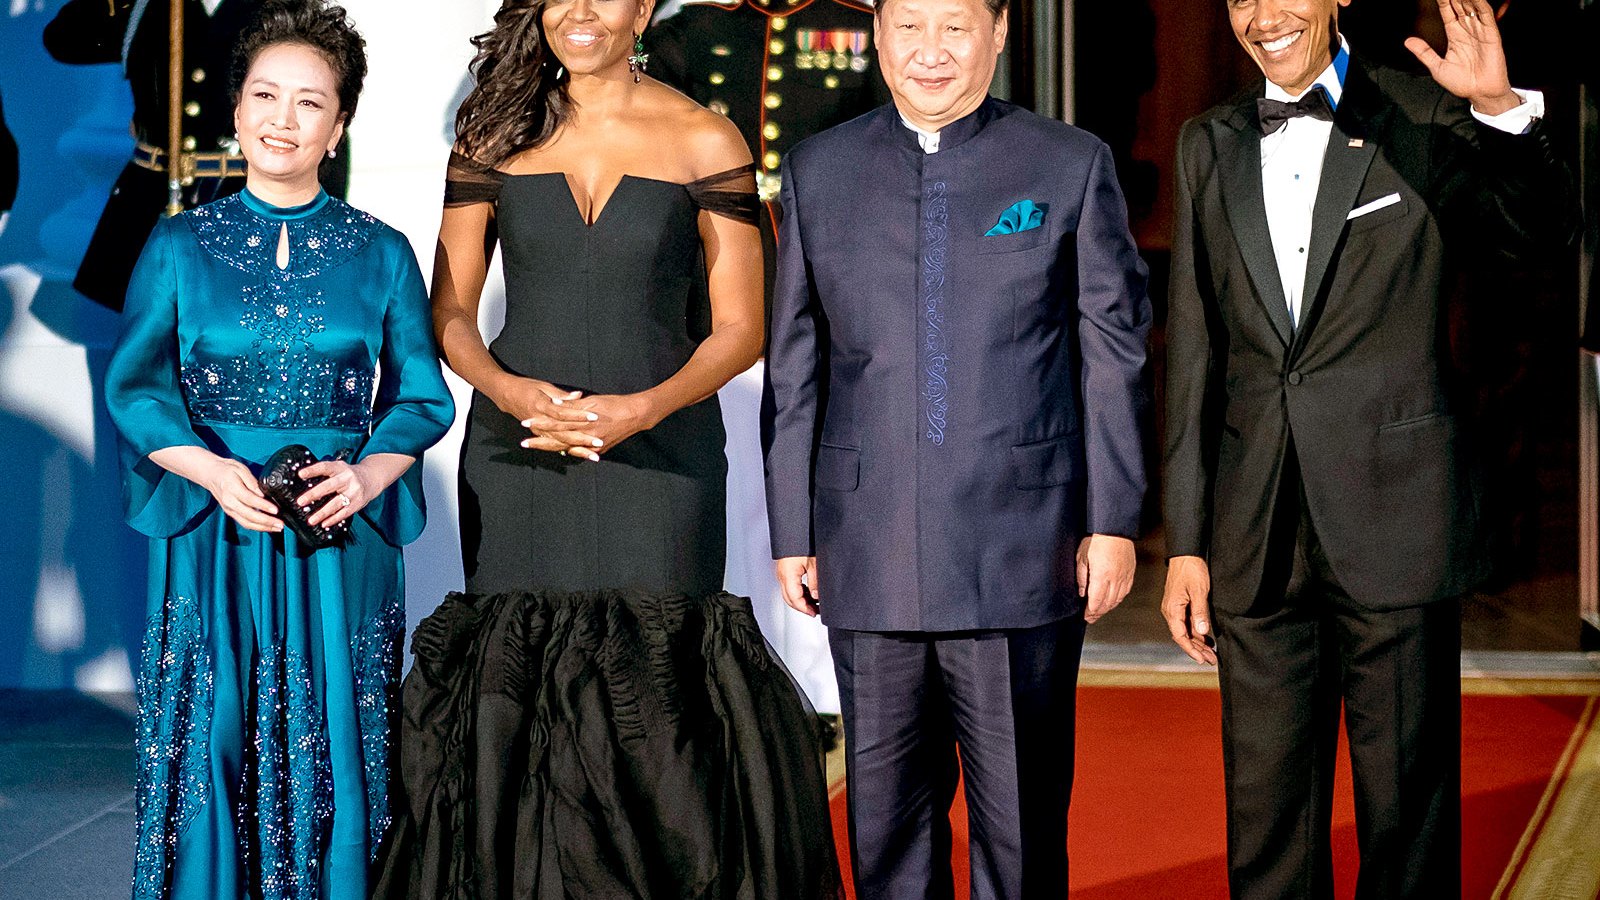 Peng Liyuan, Michelle Obama, Xi Jinping and Barack Obama